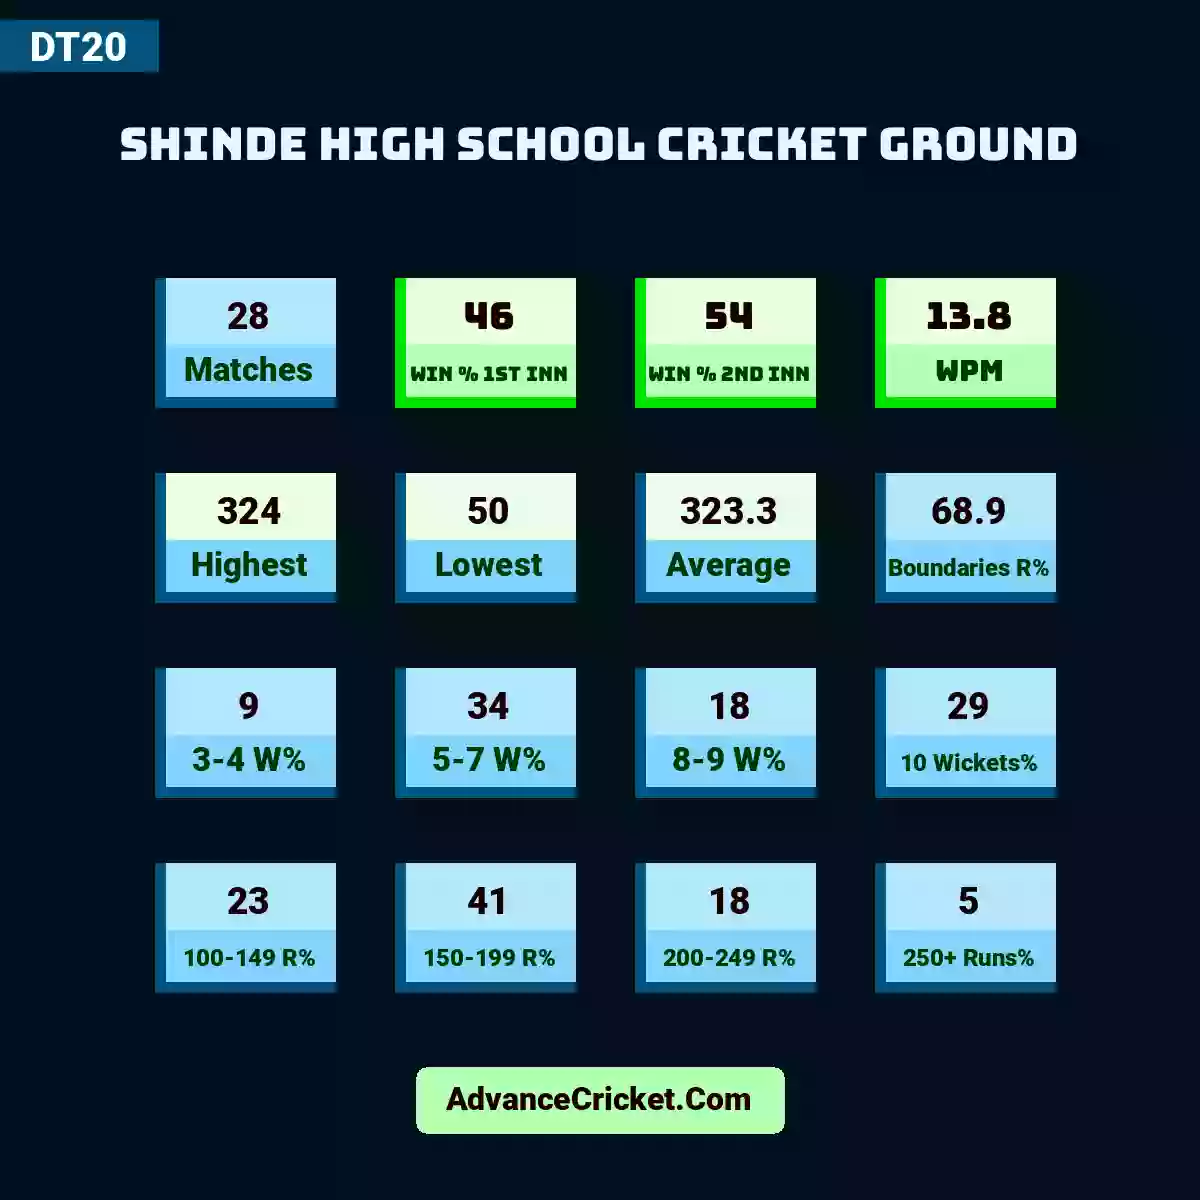 Image showing Shinde High School Cricket Ground DT20 with Matches: 28, Win % 1st Inn: 46, Win % 2nd Inn: 54, WPM: 13.8, Highest: 324, Lowest: 50, Average: 323.3, Boundaries R%: 68.9, 3-4 W%: 9, 5-7 W%: 34, 8-9 W%: 18, 10 Wickets%: 29, 100-149 R%: 23, 150-199 R%: 41, 200-249 R%: 18, 250+ Runs%: 5.